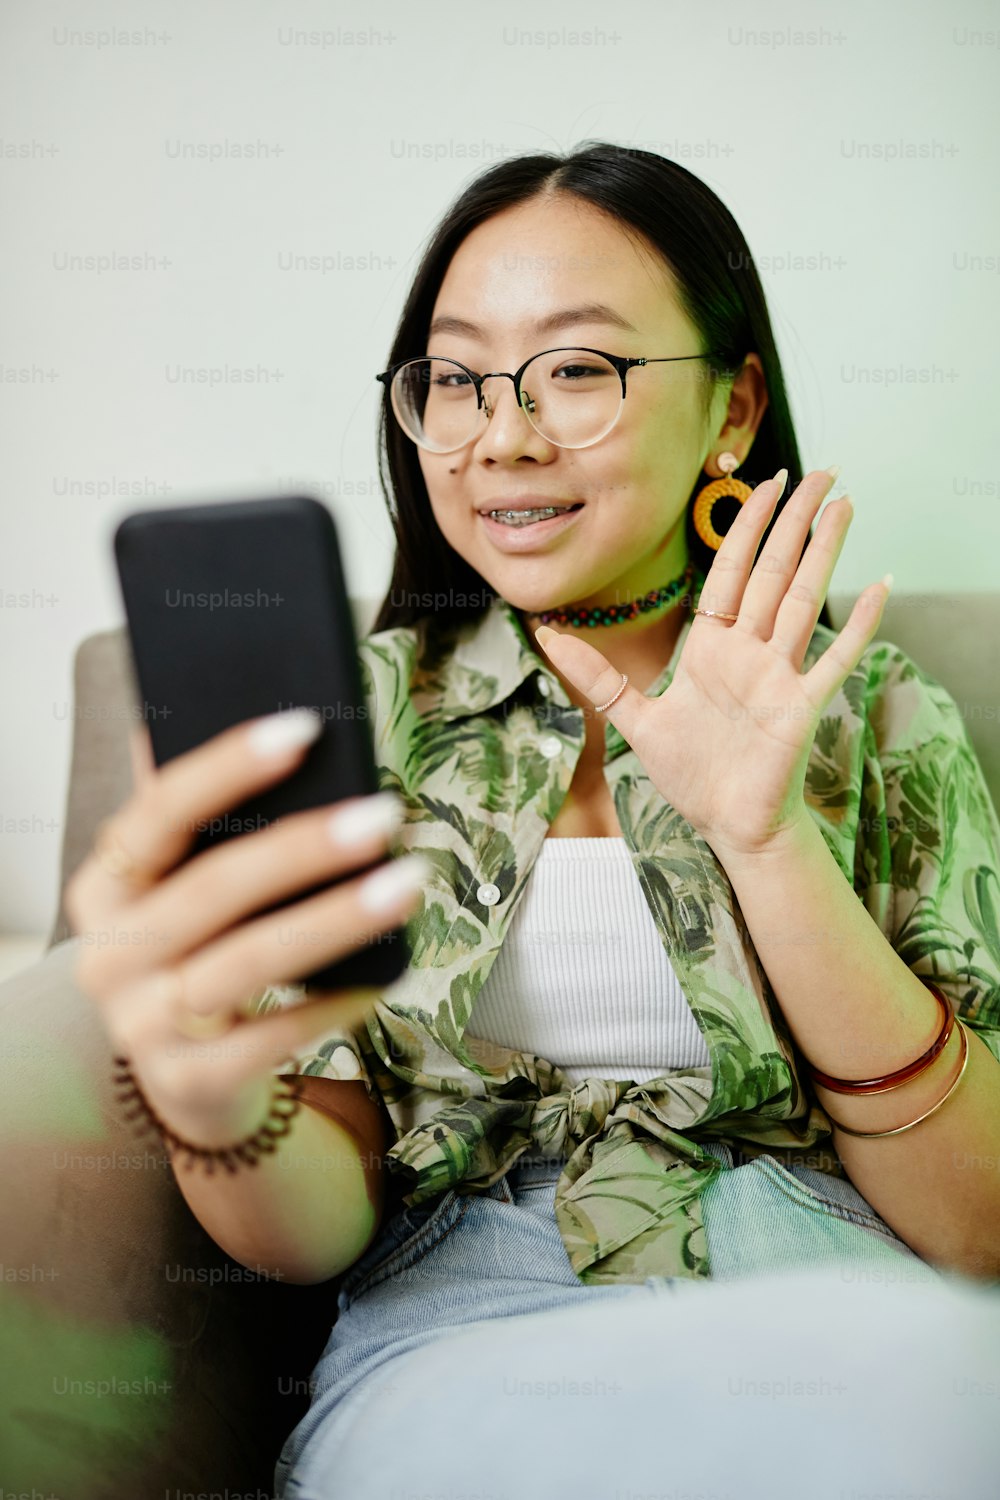 Retrato vertical de adolescente asiática acenando para smartphone veio enquanto conversava por vídeo com amigo iluminado por luz neon